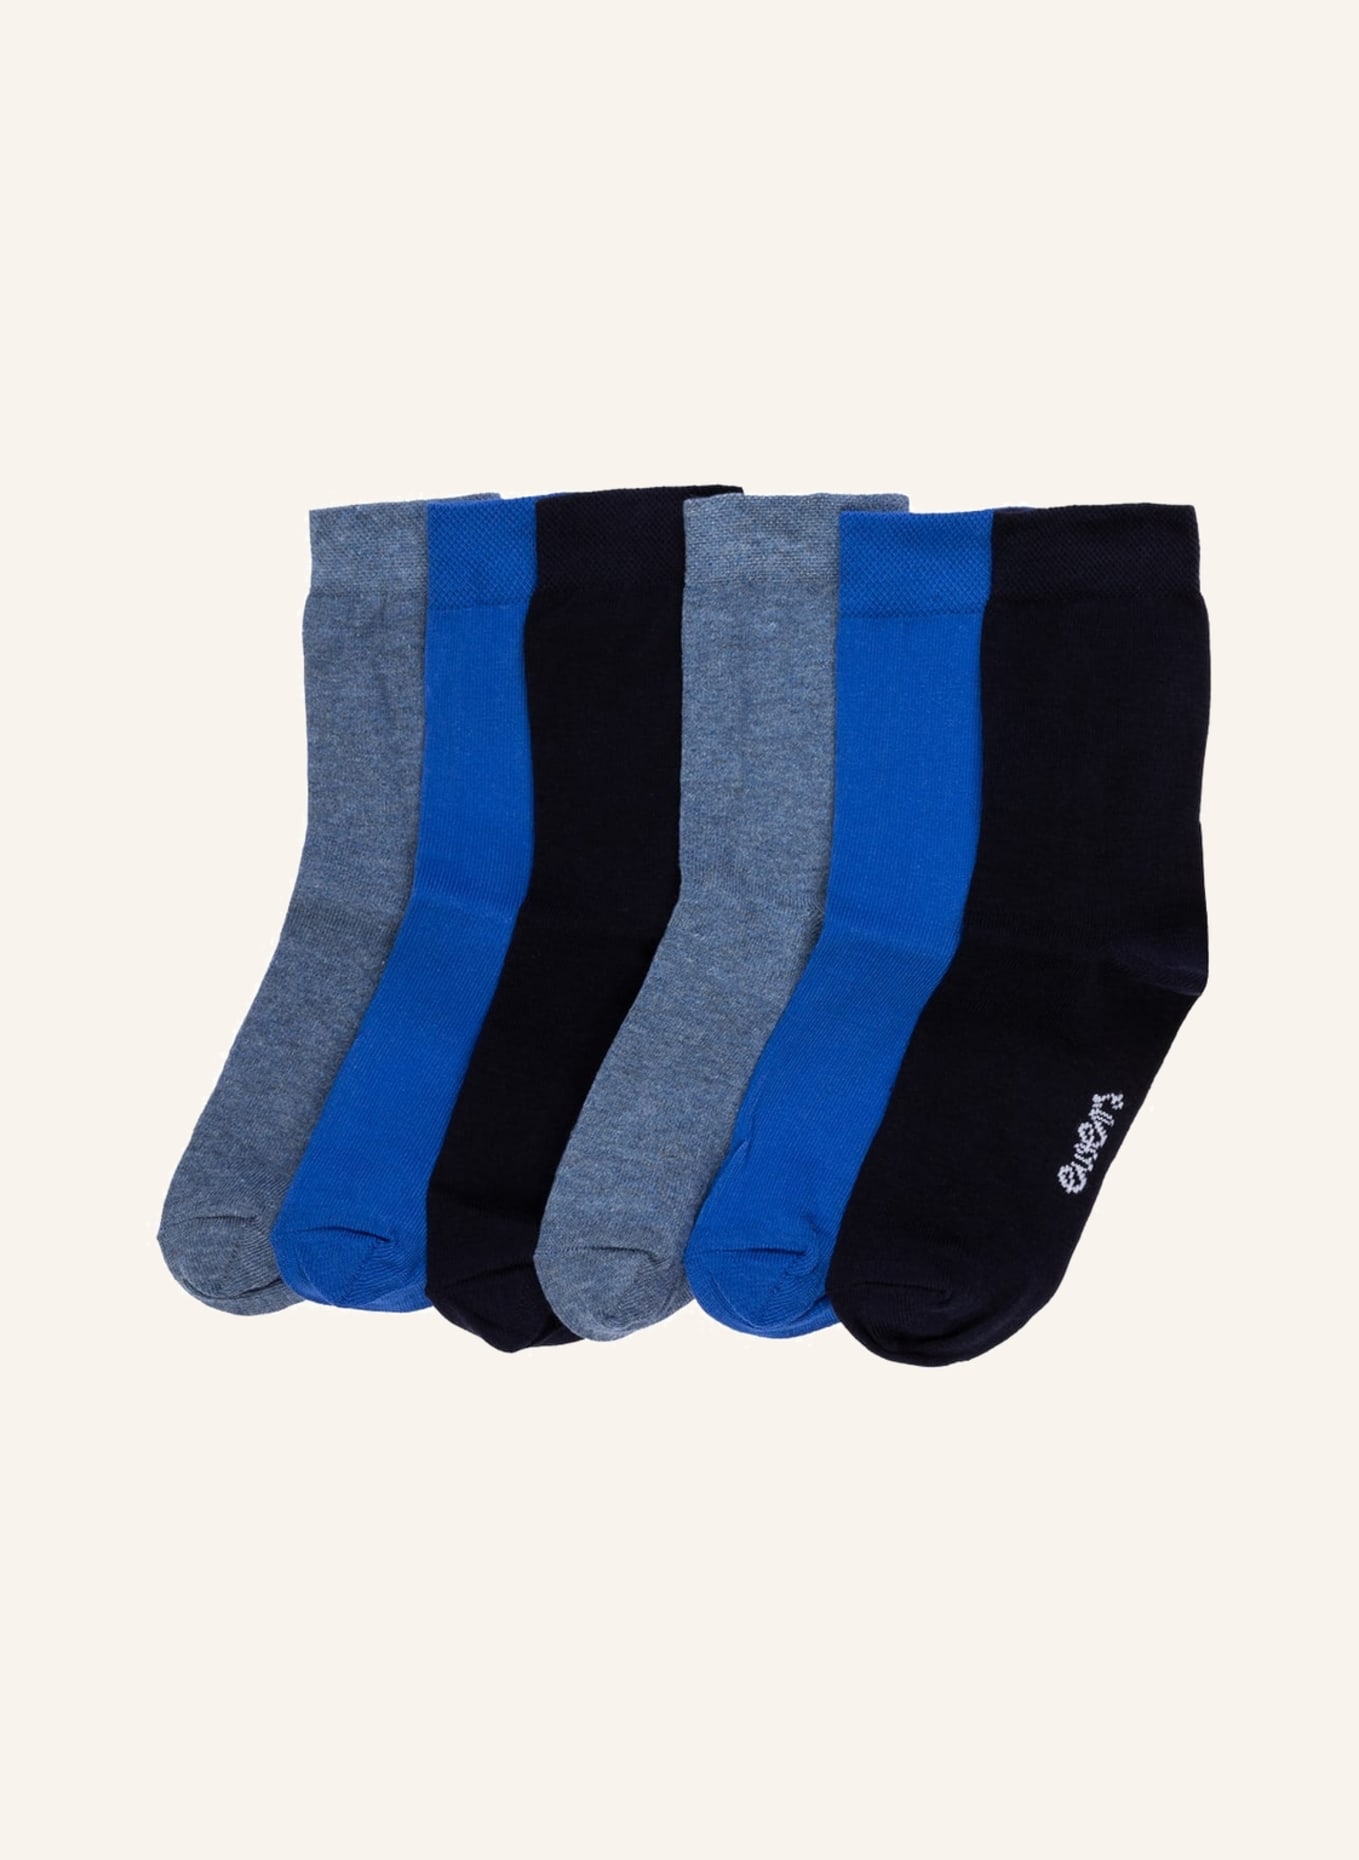 ewers COLLECTION 6er-Pack Socken, Farbe: 70 70 blau marine (Bild 1)